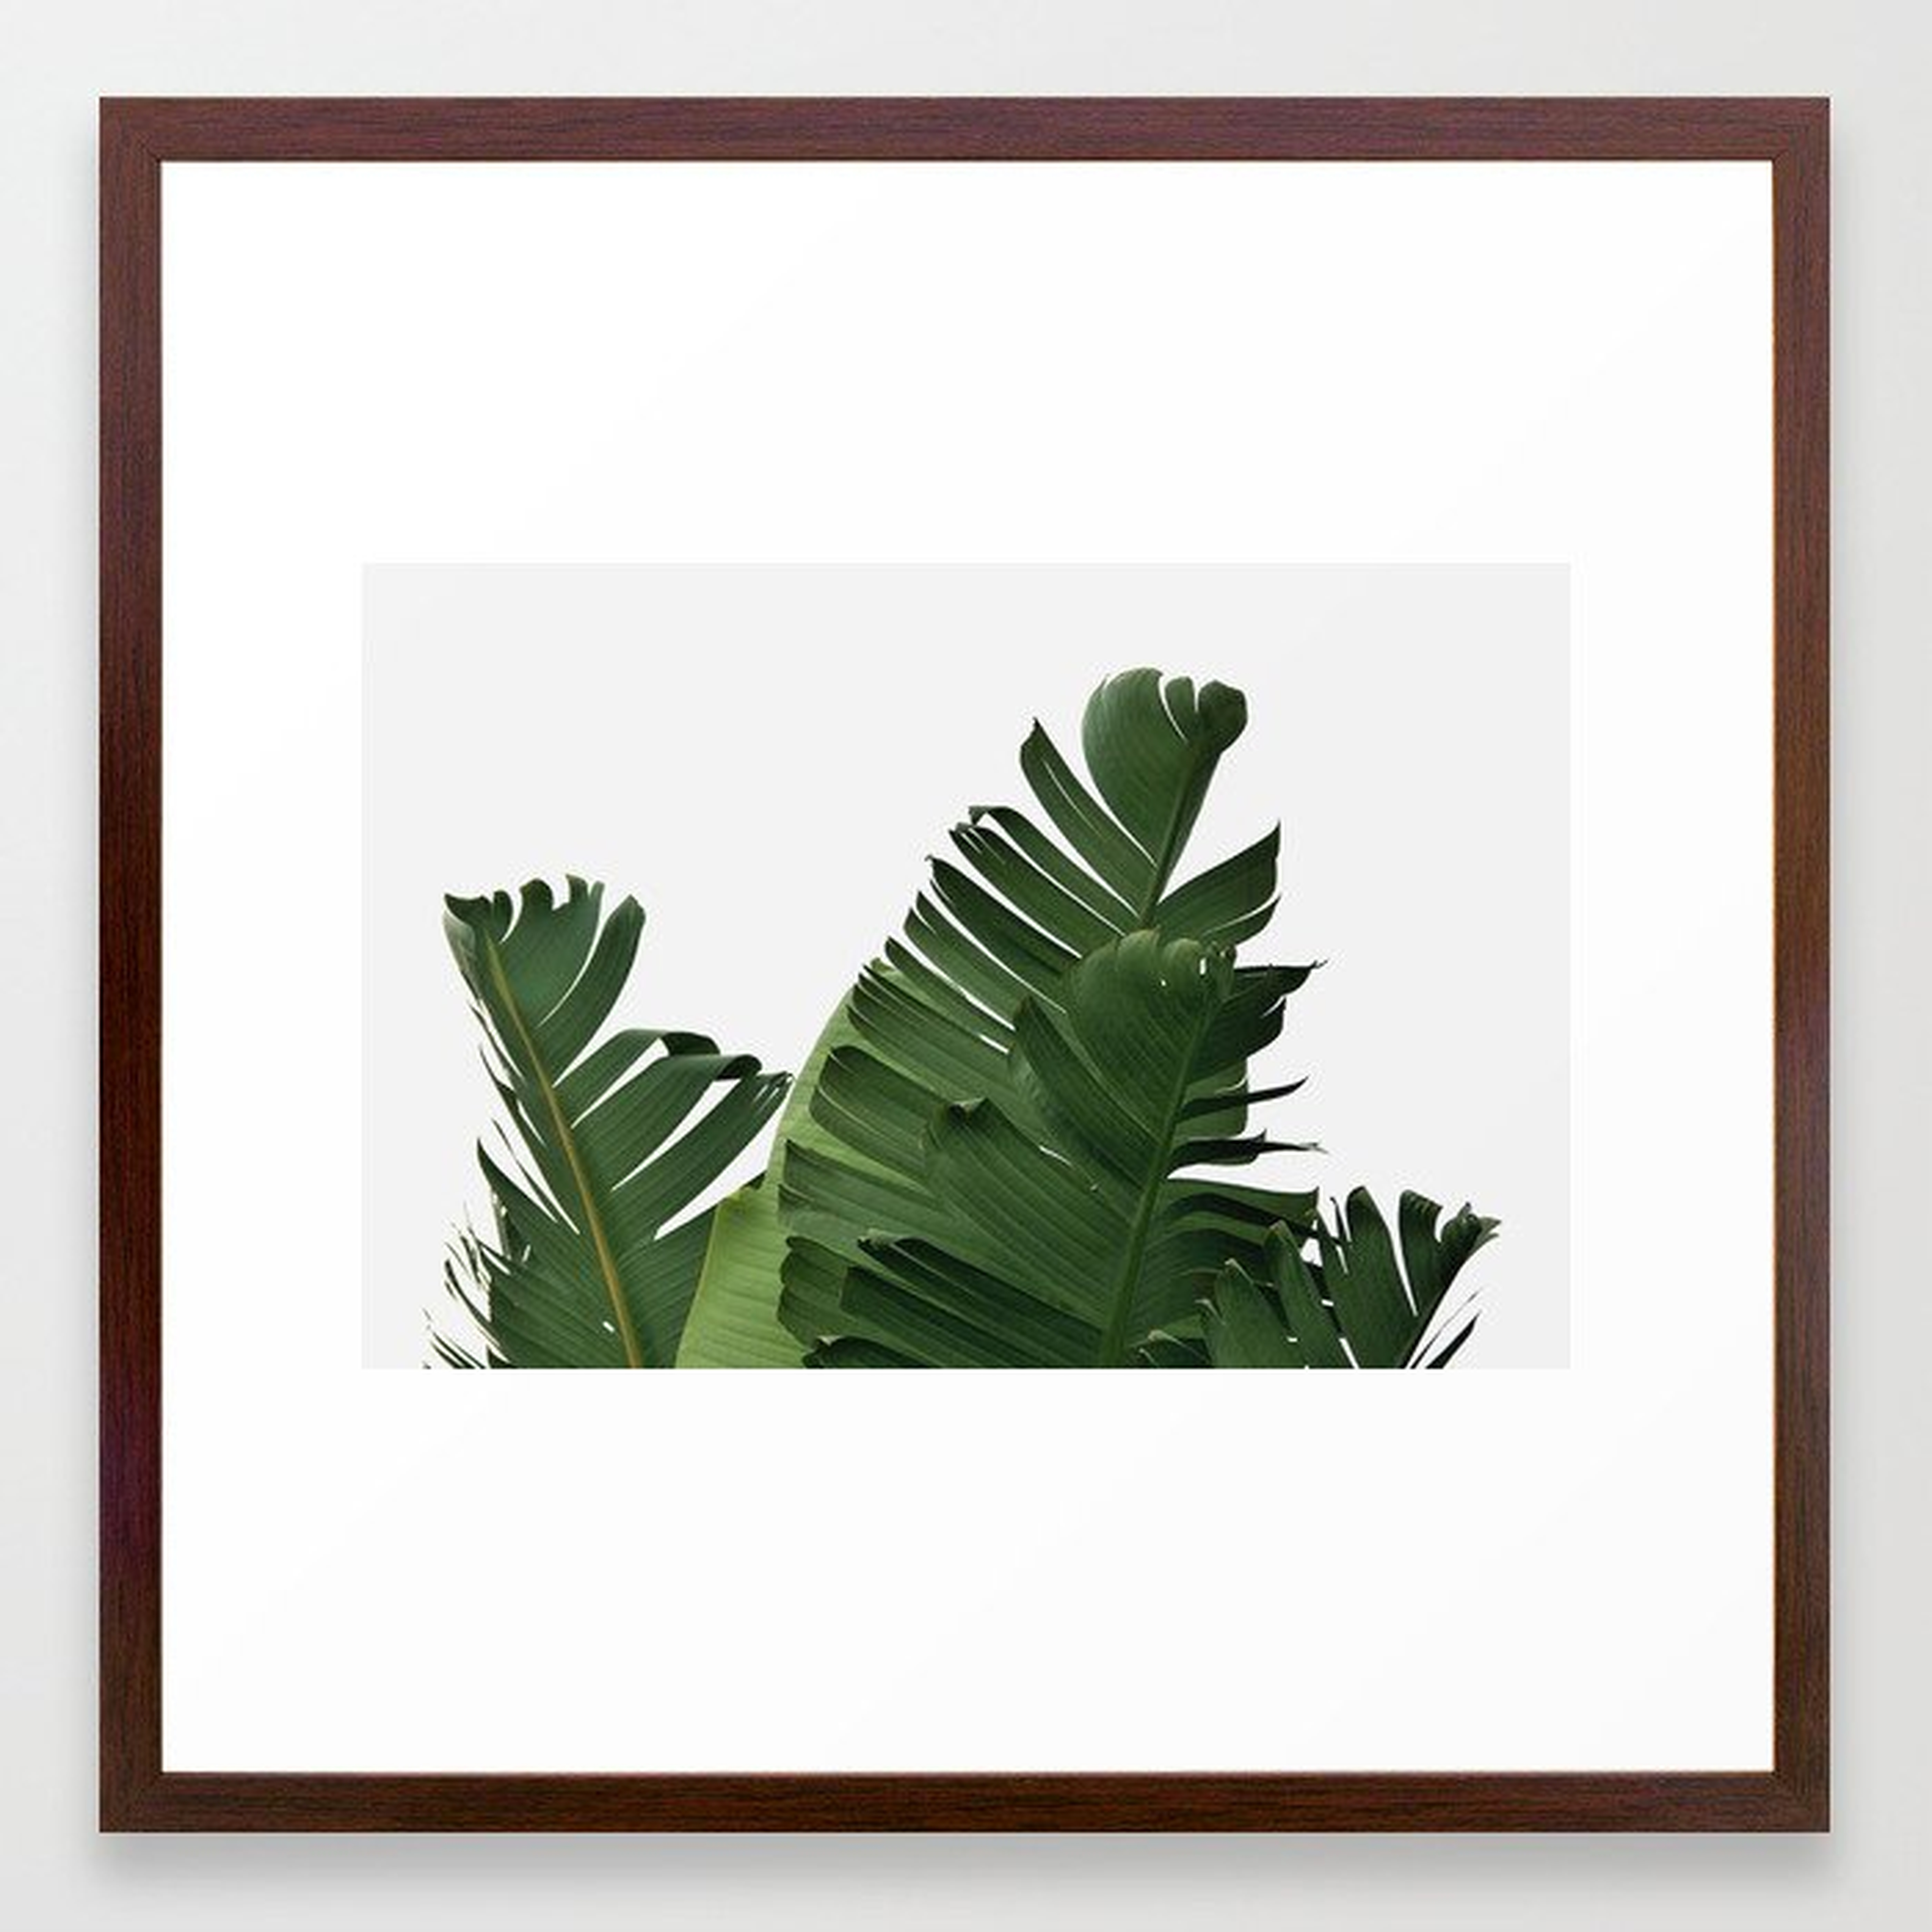 Minimal Banana Leaves Framed Art Print - 22 x 22 - Conservative Walnut Frame - Society6